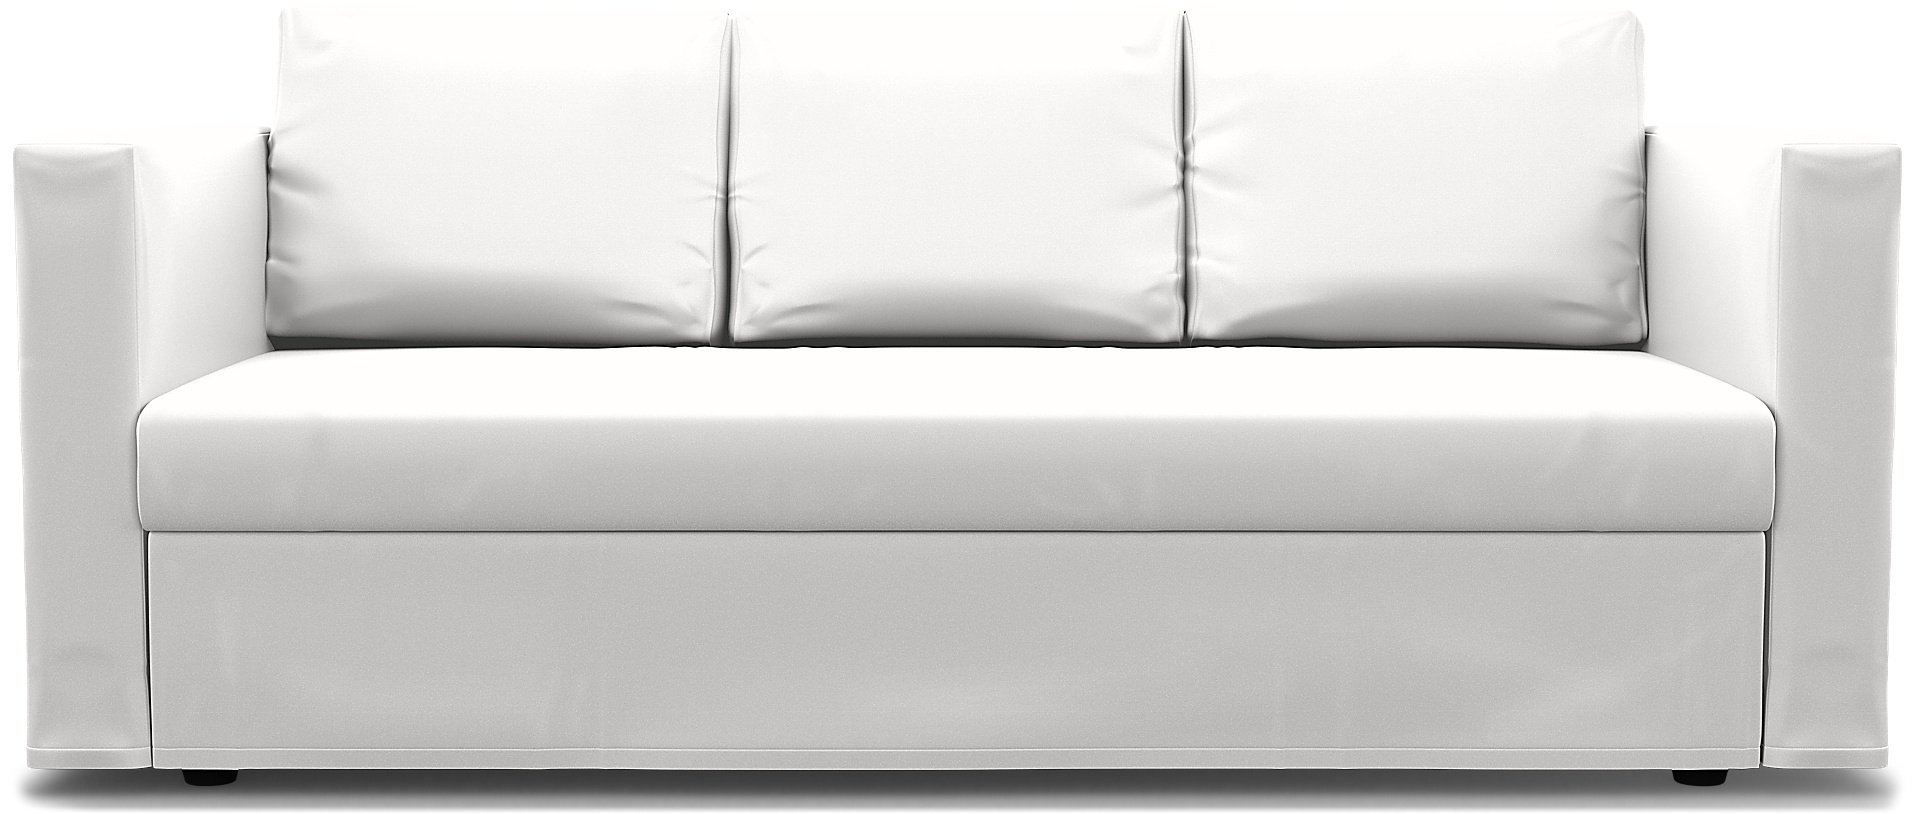 IKEA - Friheten 3 Seater Sofa Bed Cover, Absolute White, Cotton - Bemz